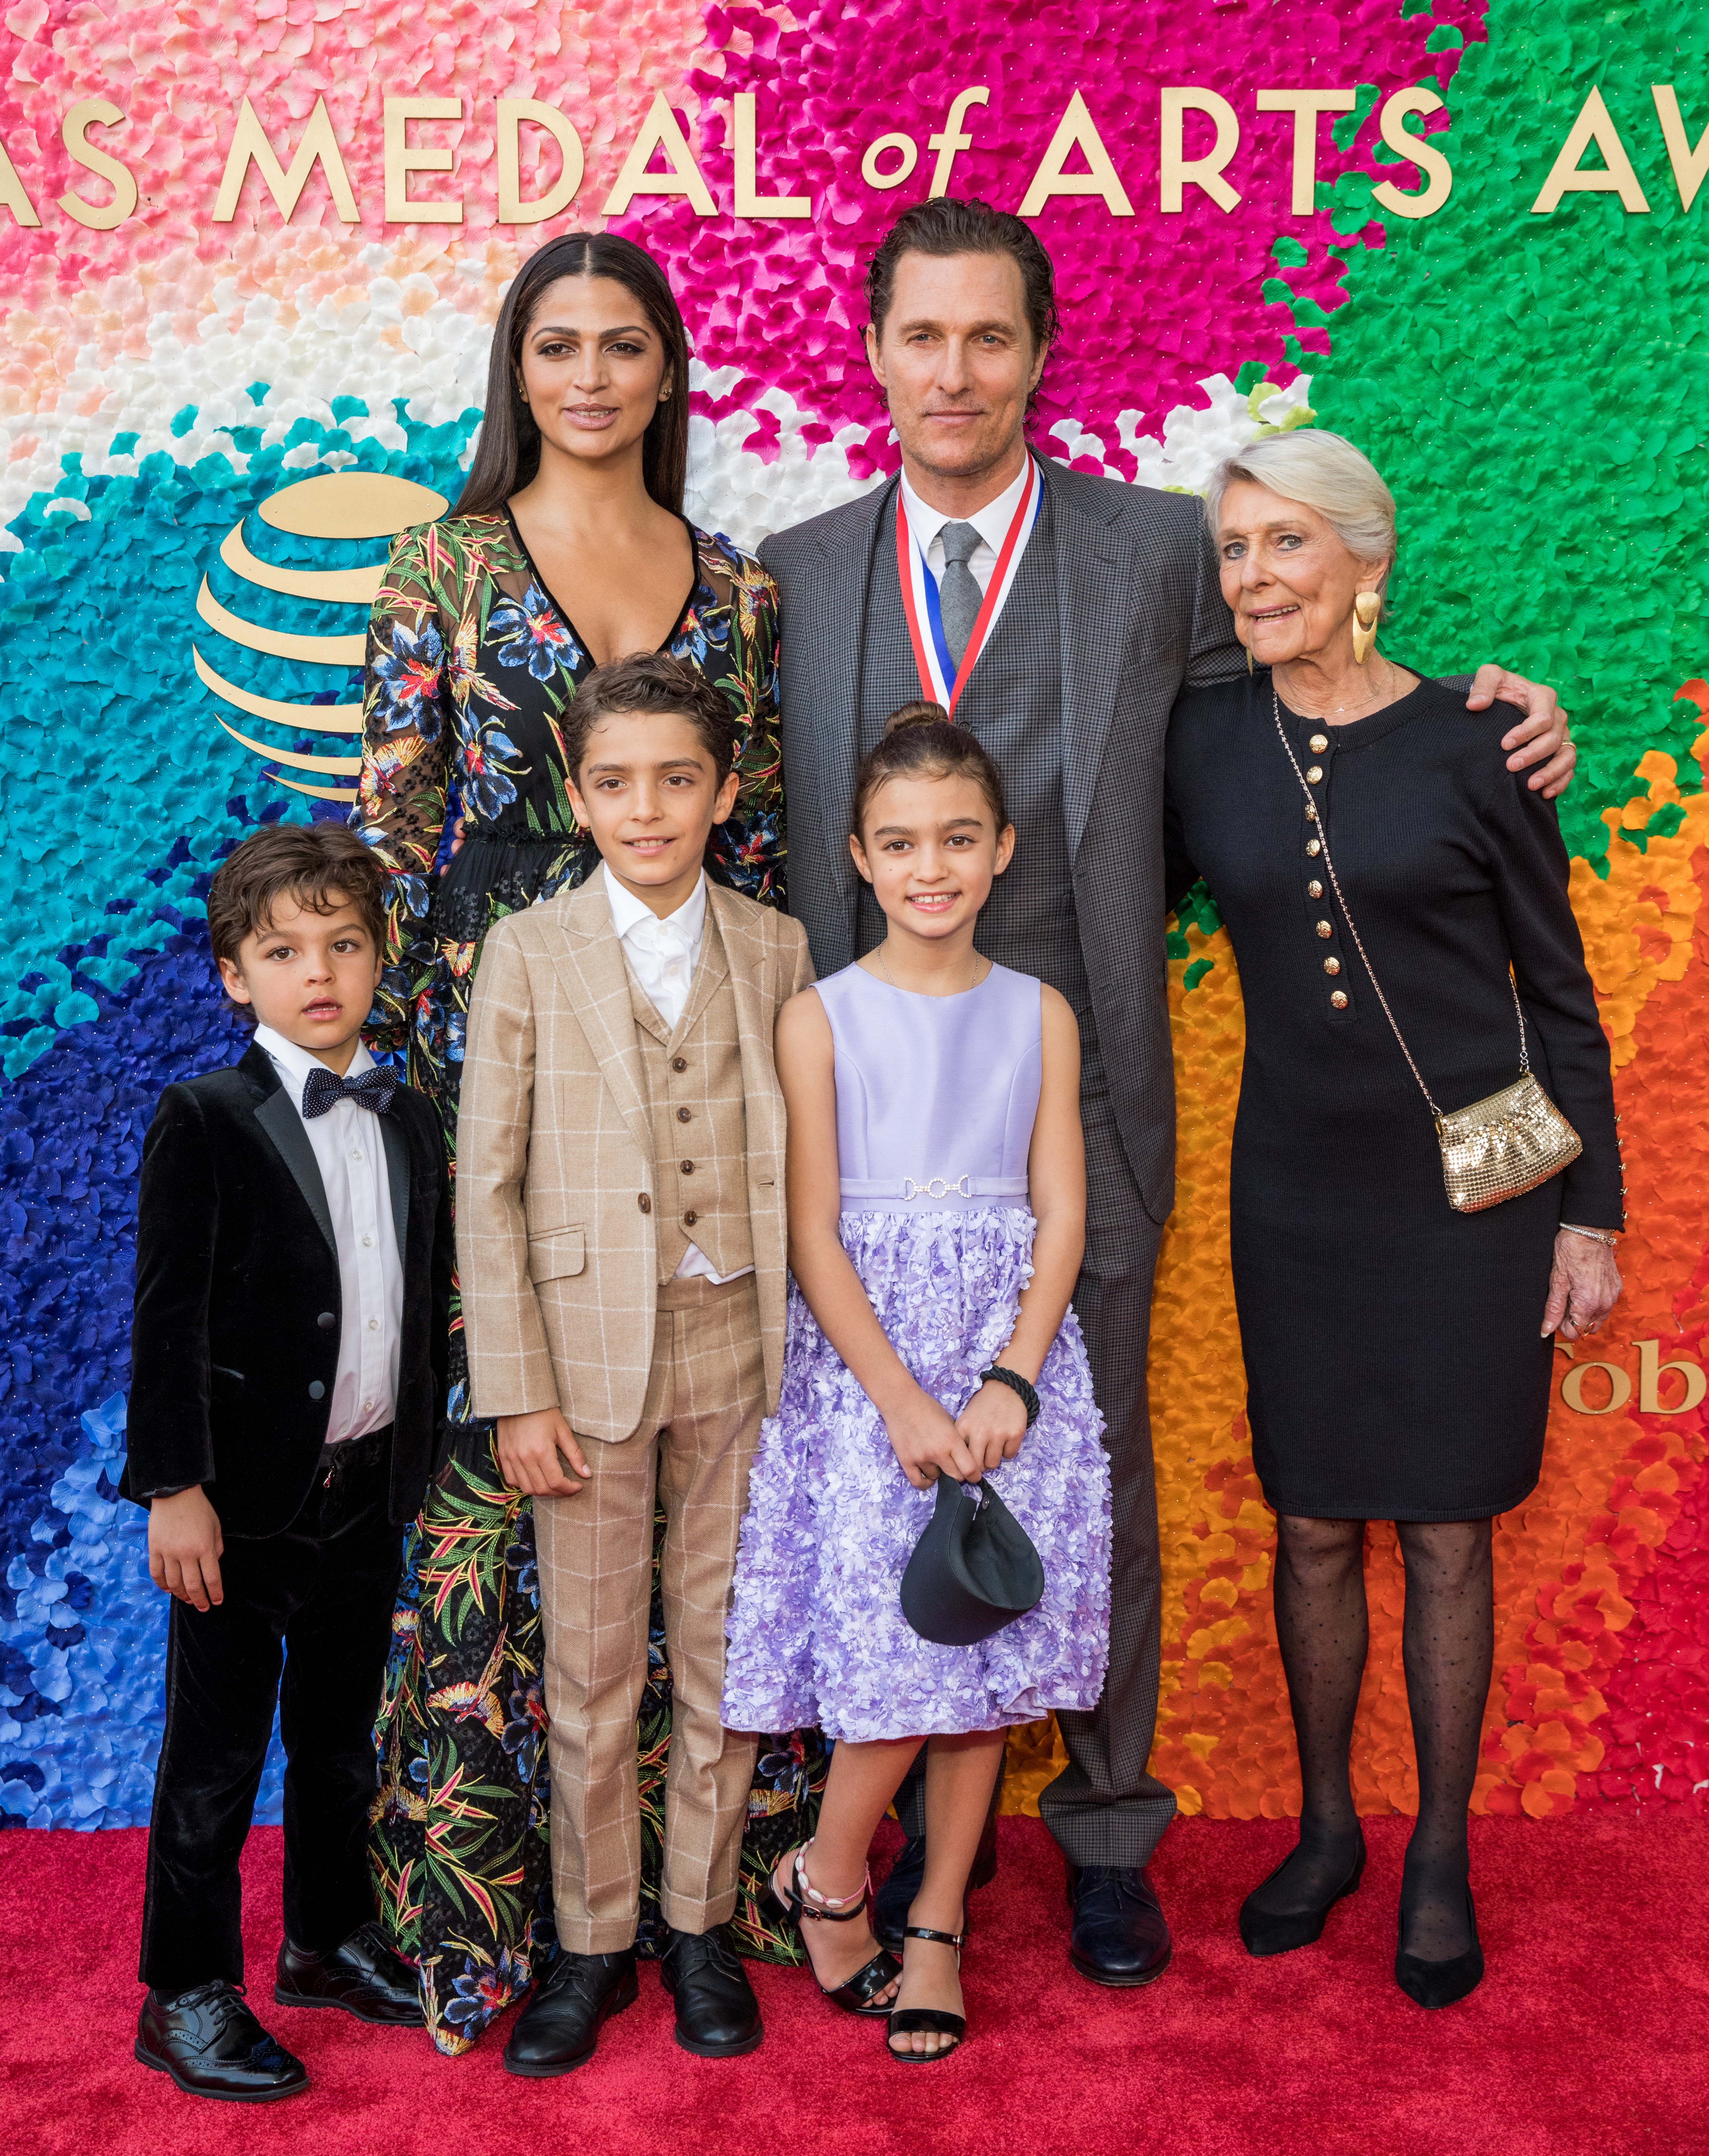 Livingston Alves McConaughey, Camila Alves, Levi Alves McConaughey, Matthew McConaughey, Vida Alves McConaughey, and Kay McConaughey at the Texas Medal of Arts Awards on February 27, 2019, in Austin, Texas | Source: Getty Images